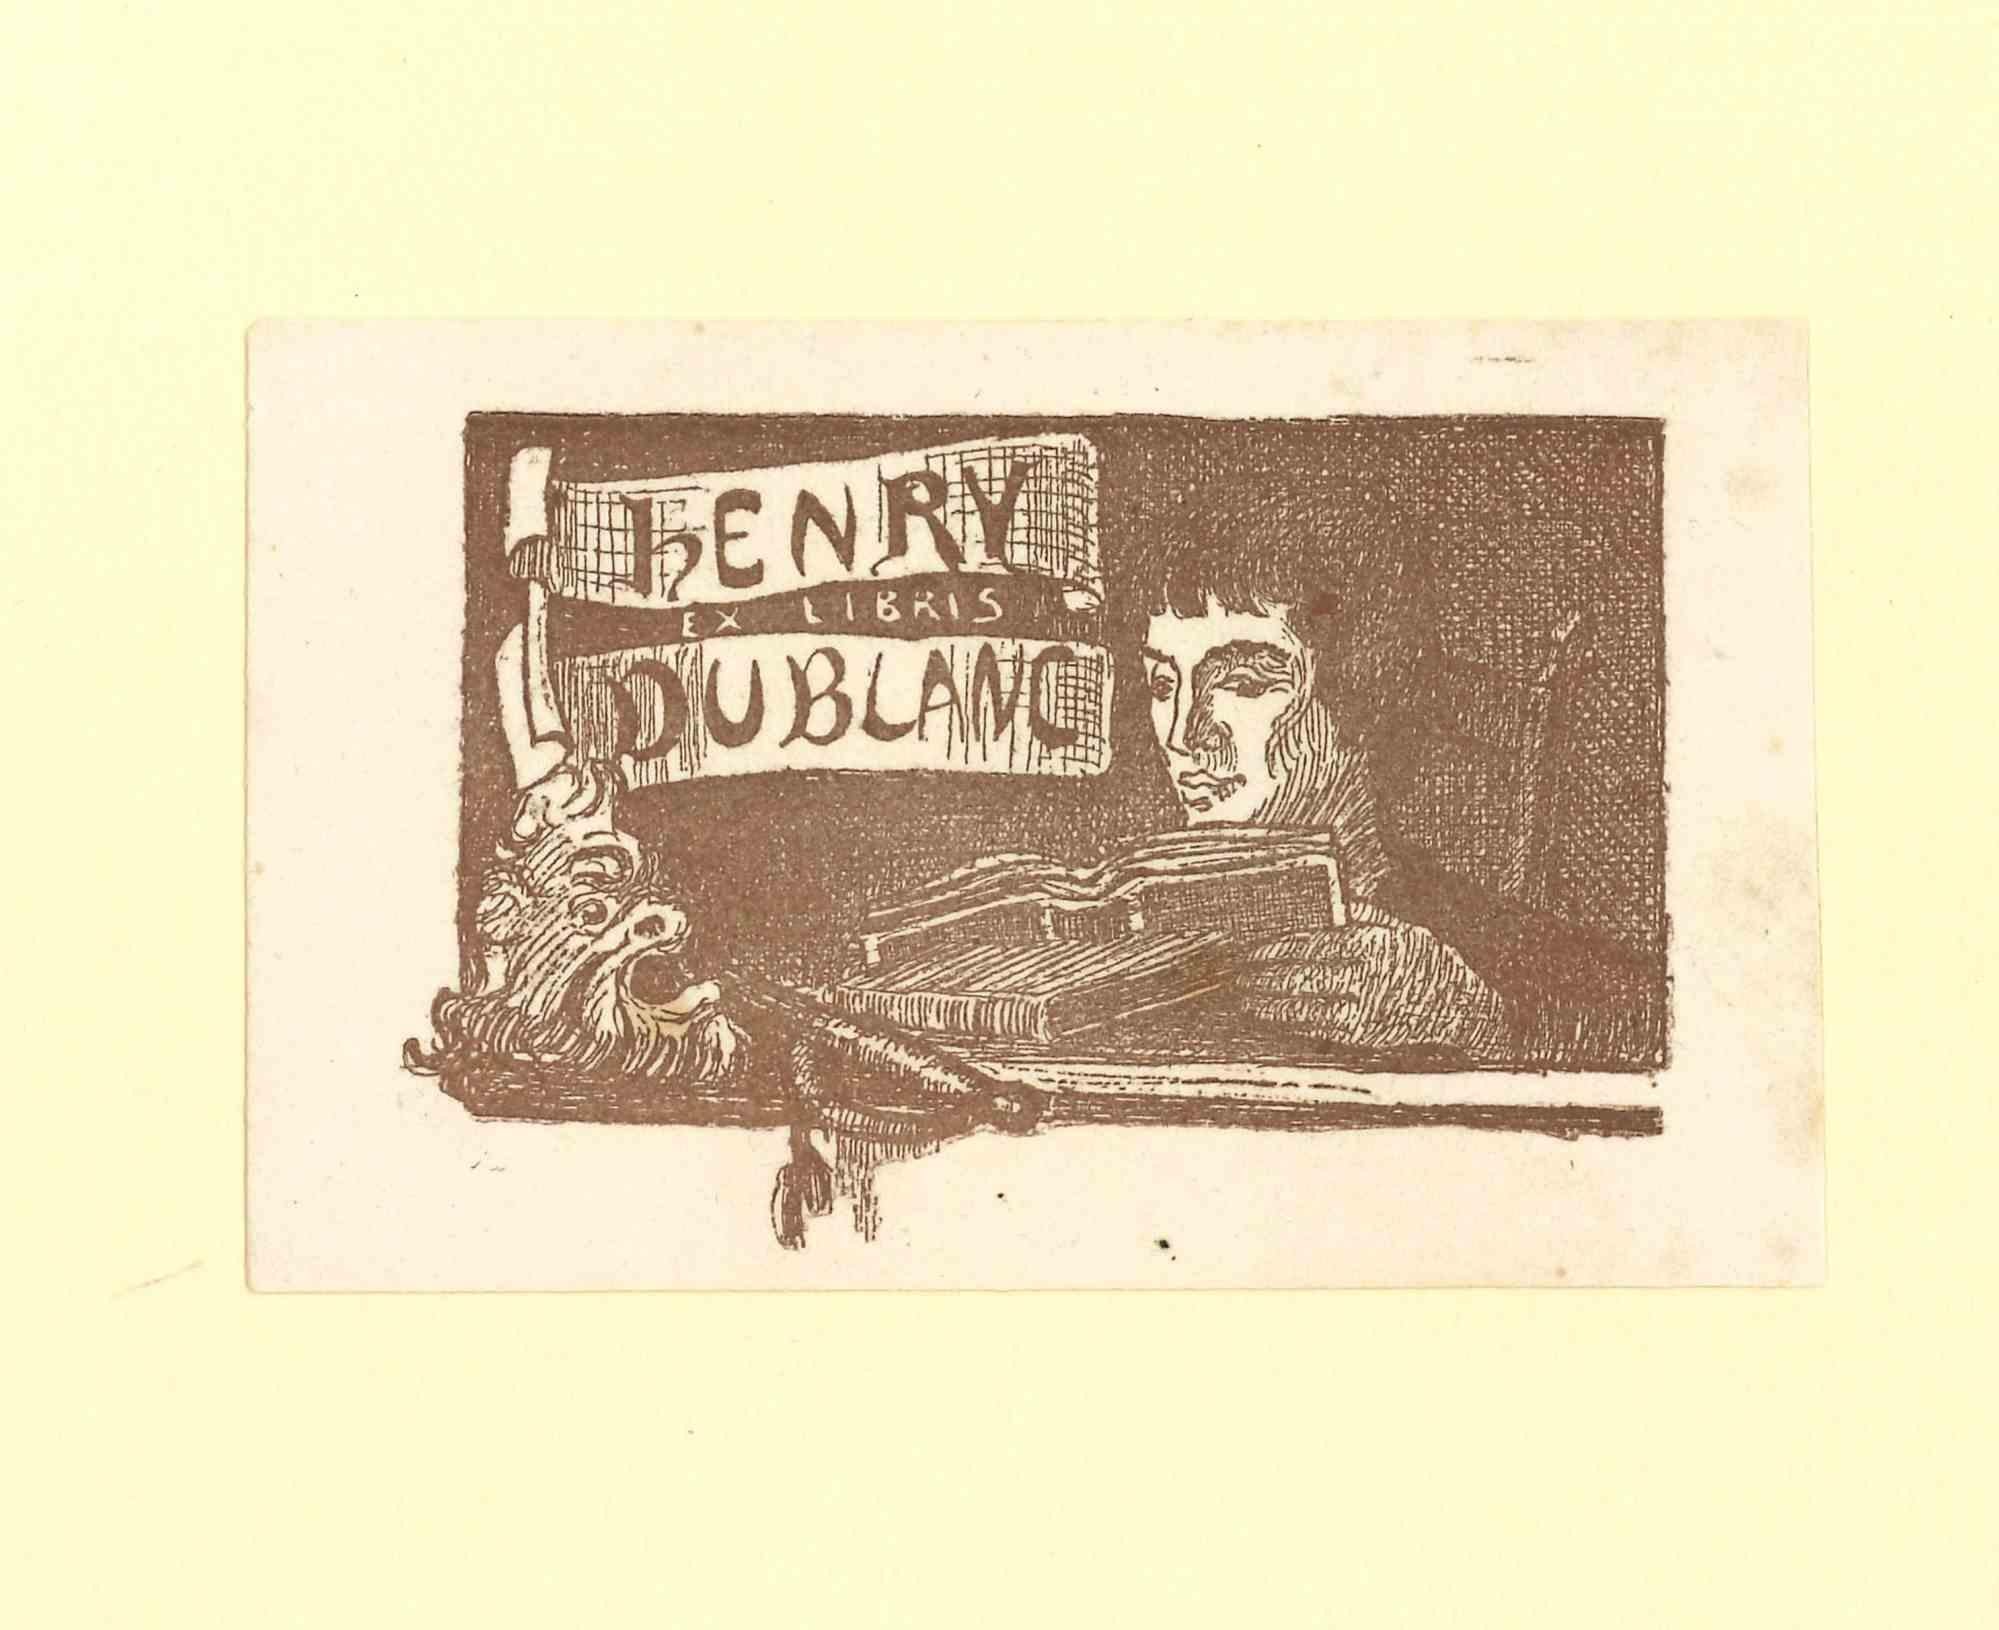 Unknown Figurative Print - Ex Libris Henry Du Blanc - Original Woodcut - Early 20th Century